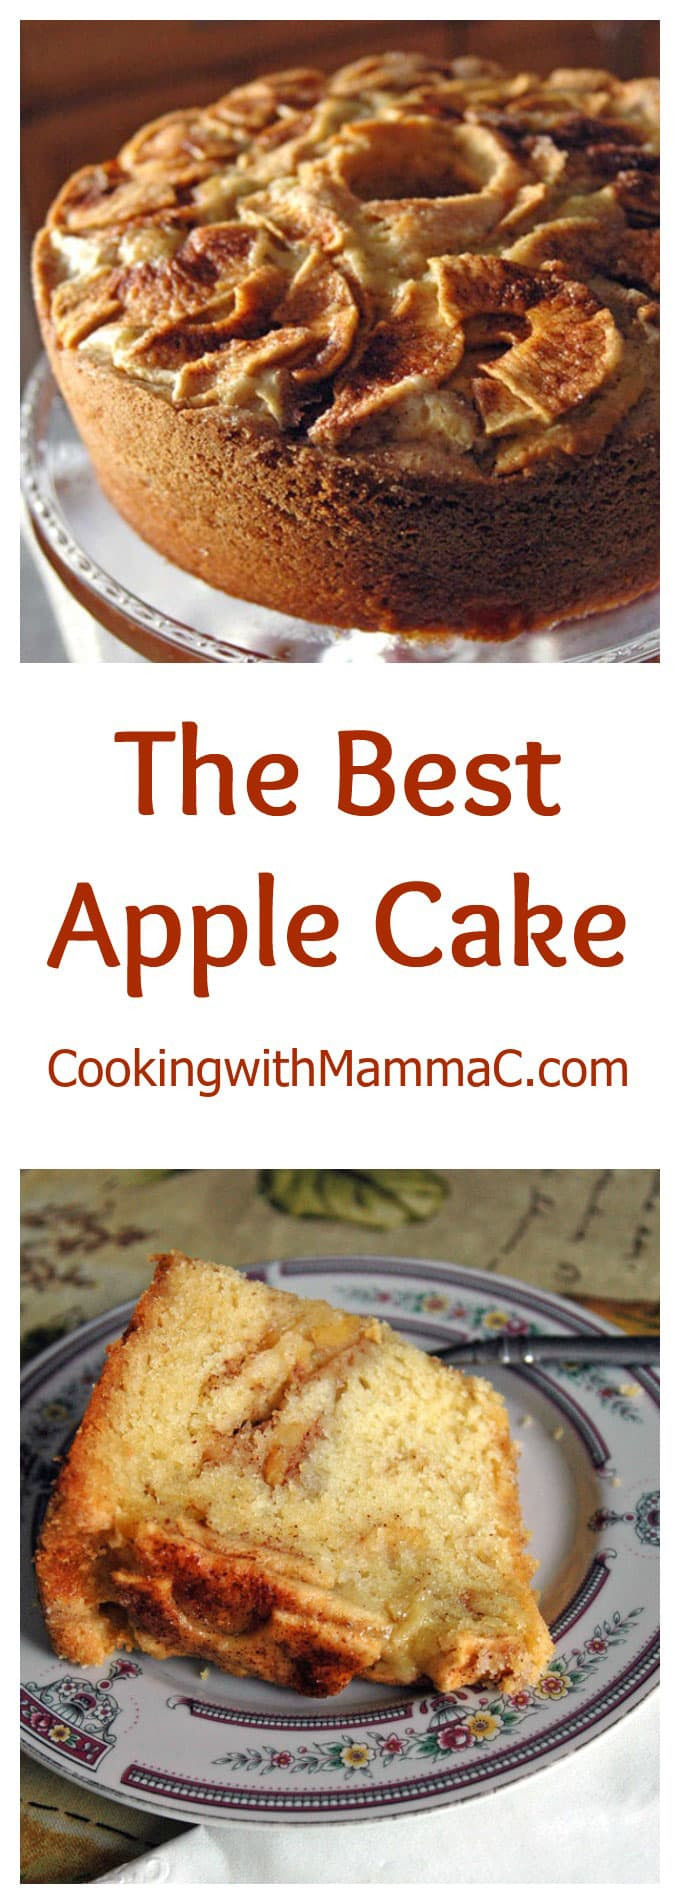 The Best Apple Cake Recipe Ever
 The Best Apple Cake